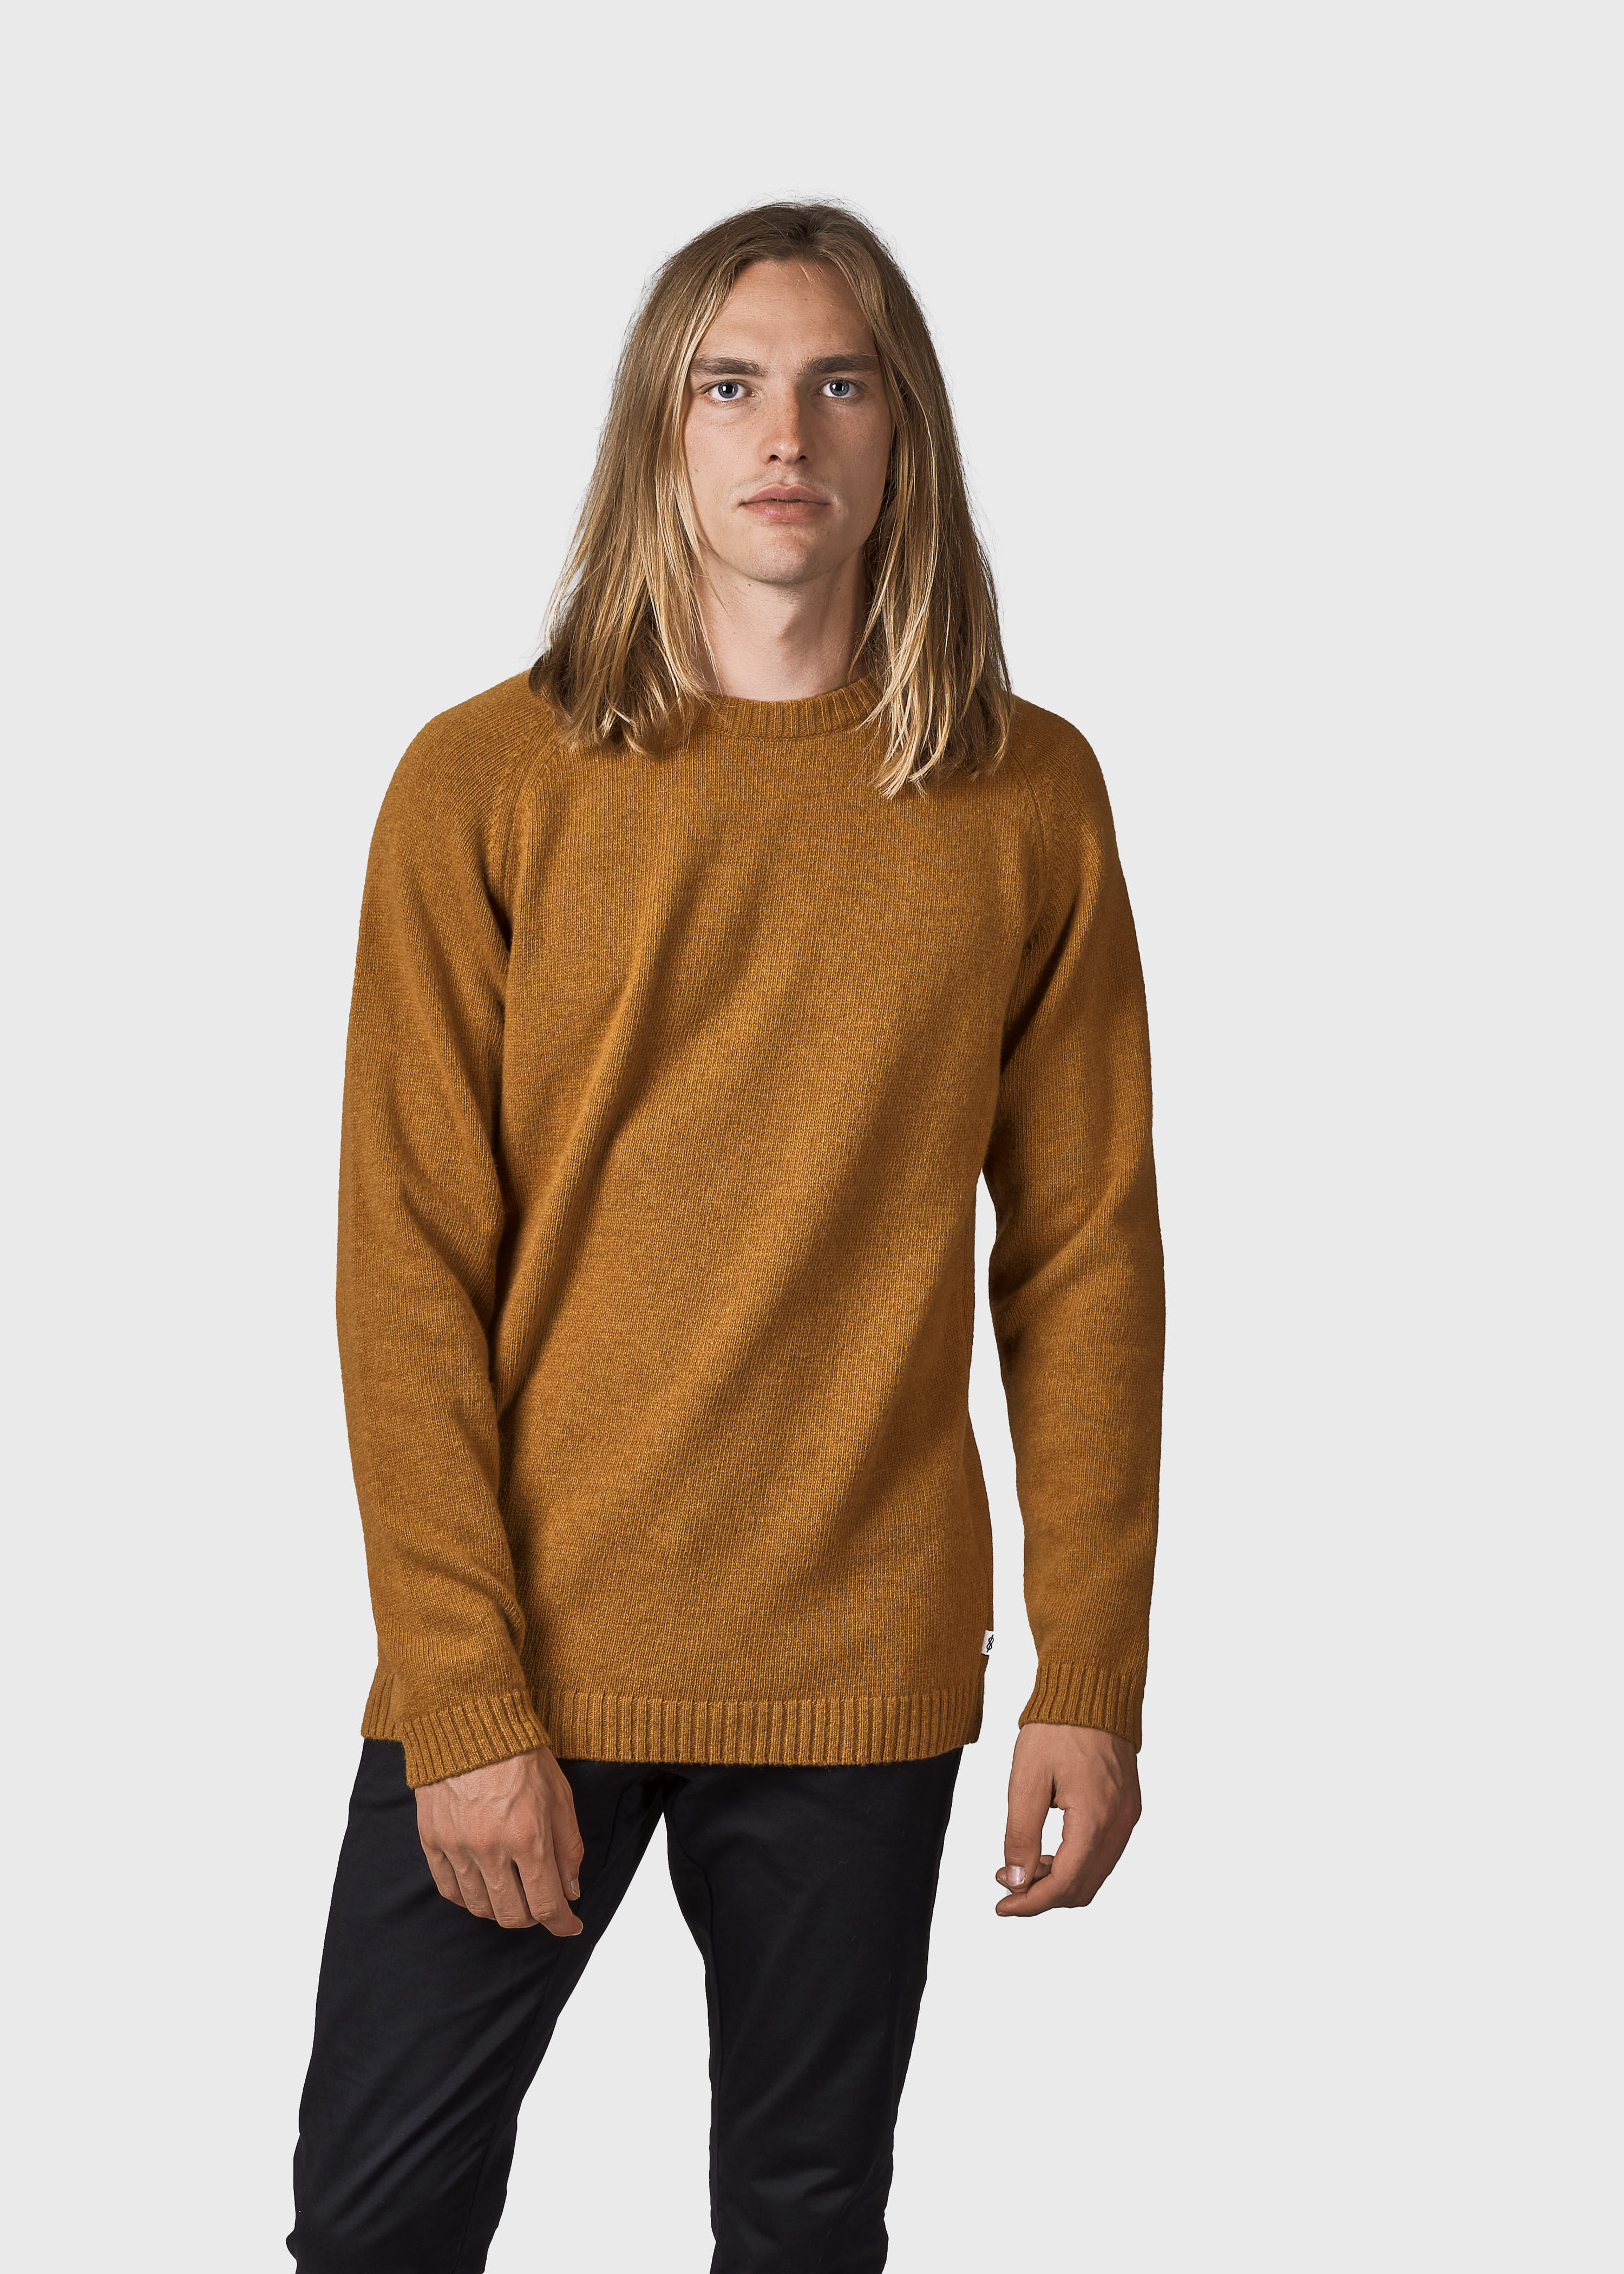 Herren-Strickpullover Ole knit Amber (100% Wolle)